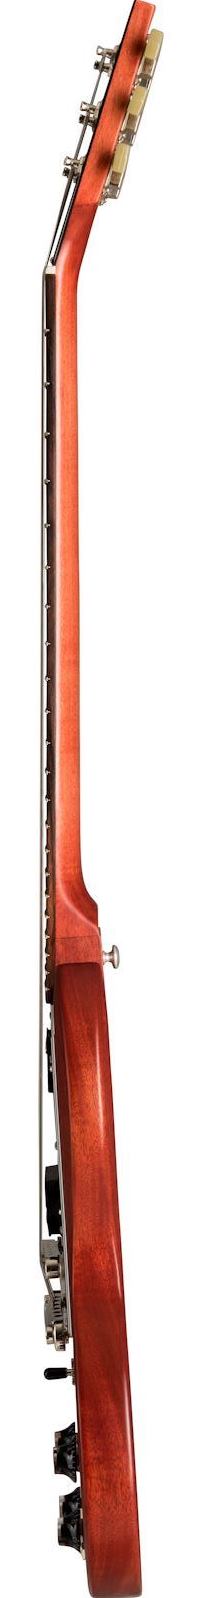 Gibson 2019 SG Tribute Vintage Cherry Satin по цене 185 900 ₽